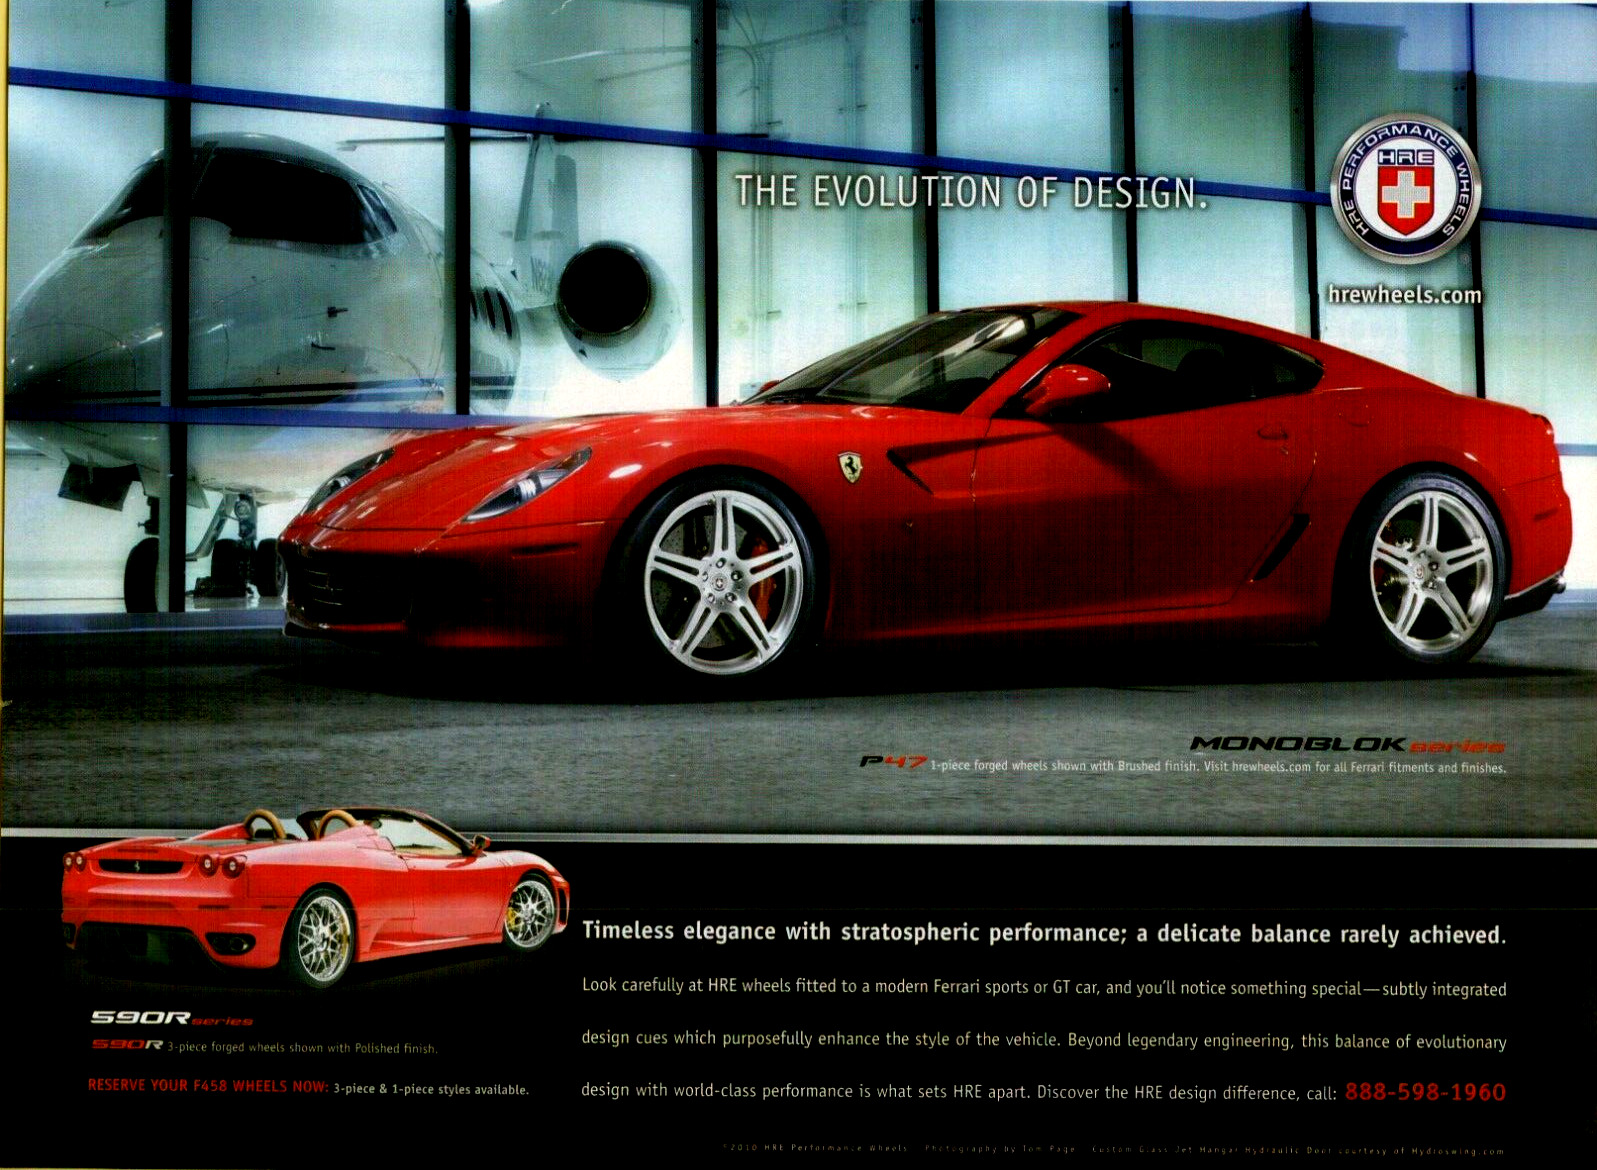 2010 HRE Wheels Monoglok Series Performance Rims Red Ferrari VINTAGE PRINT AD